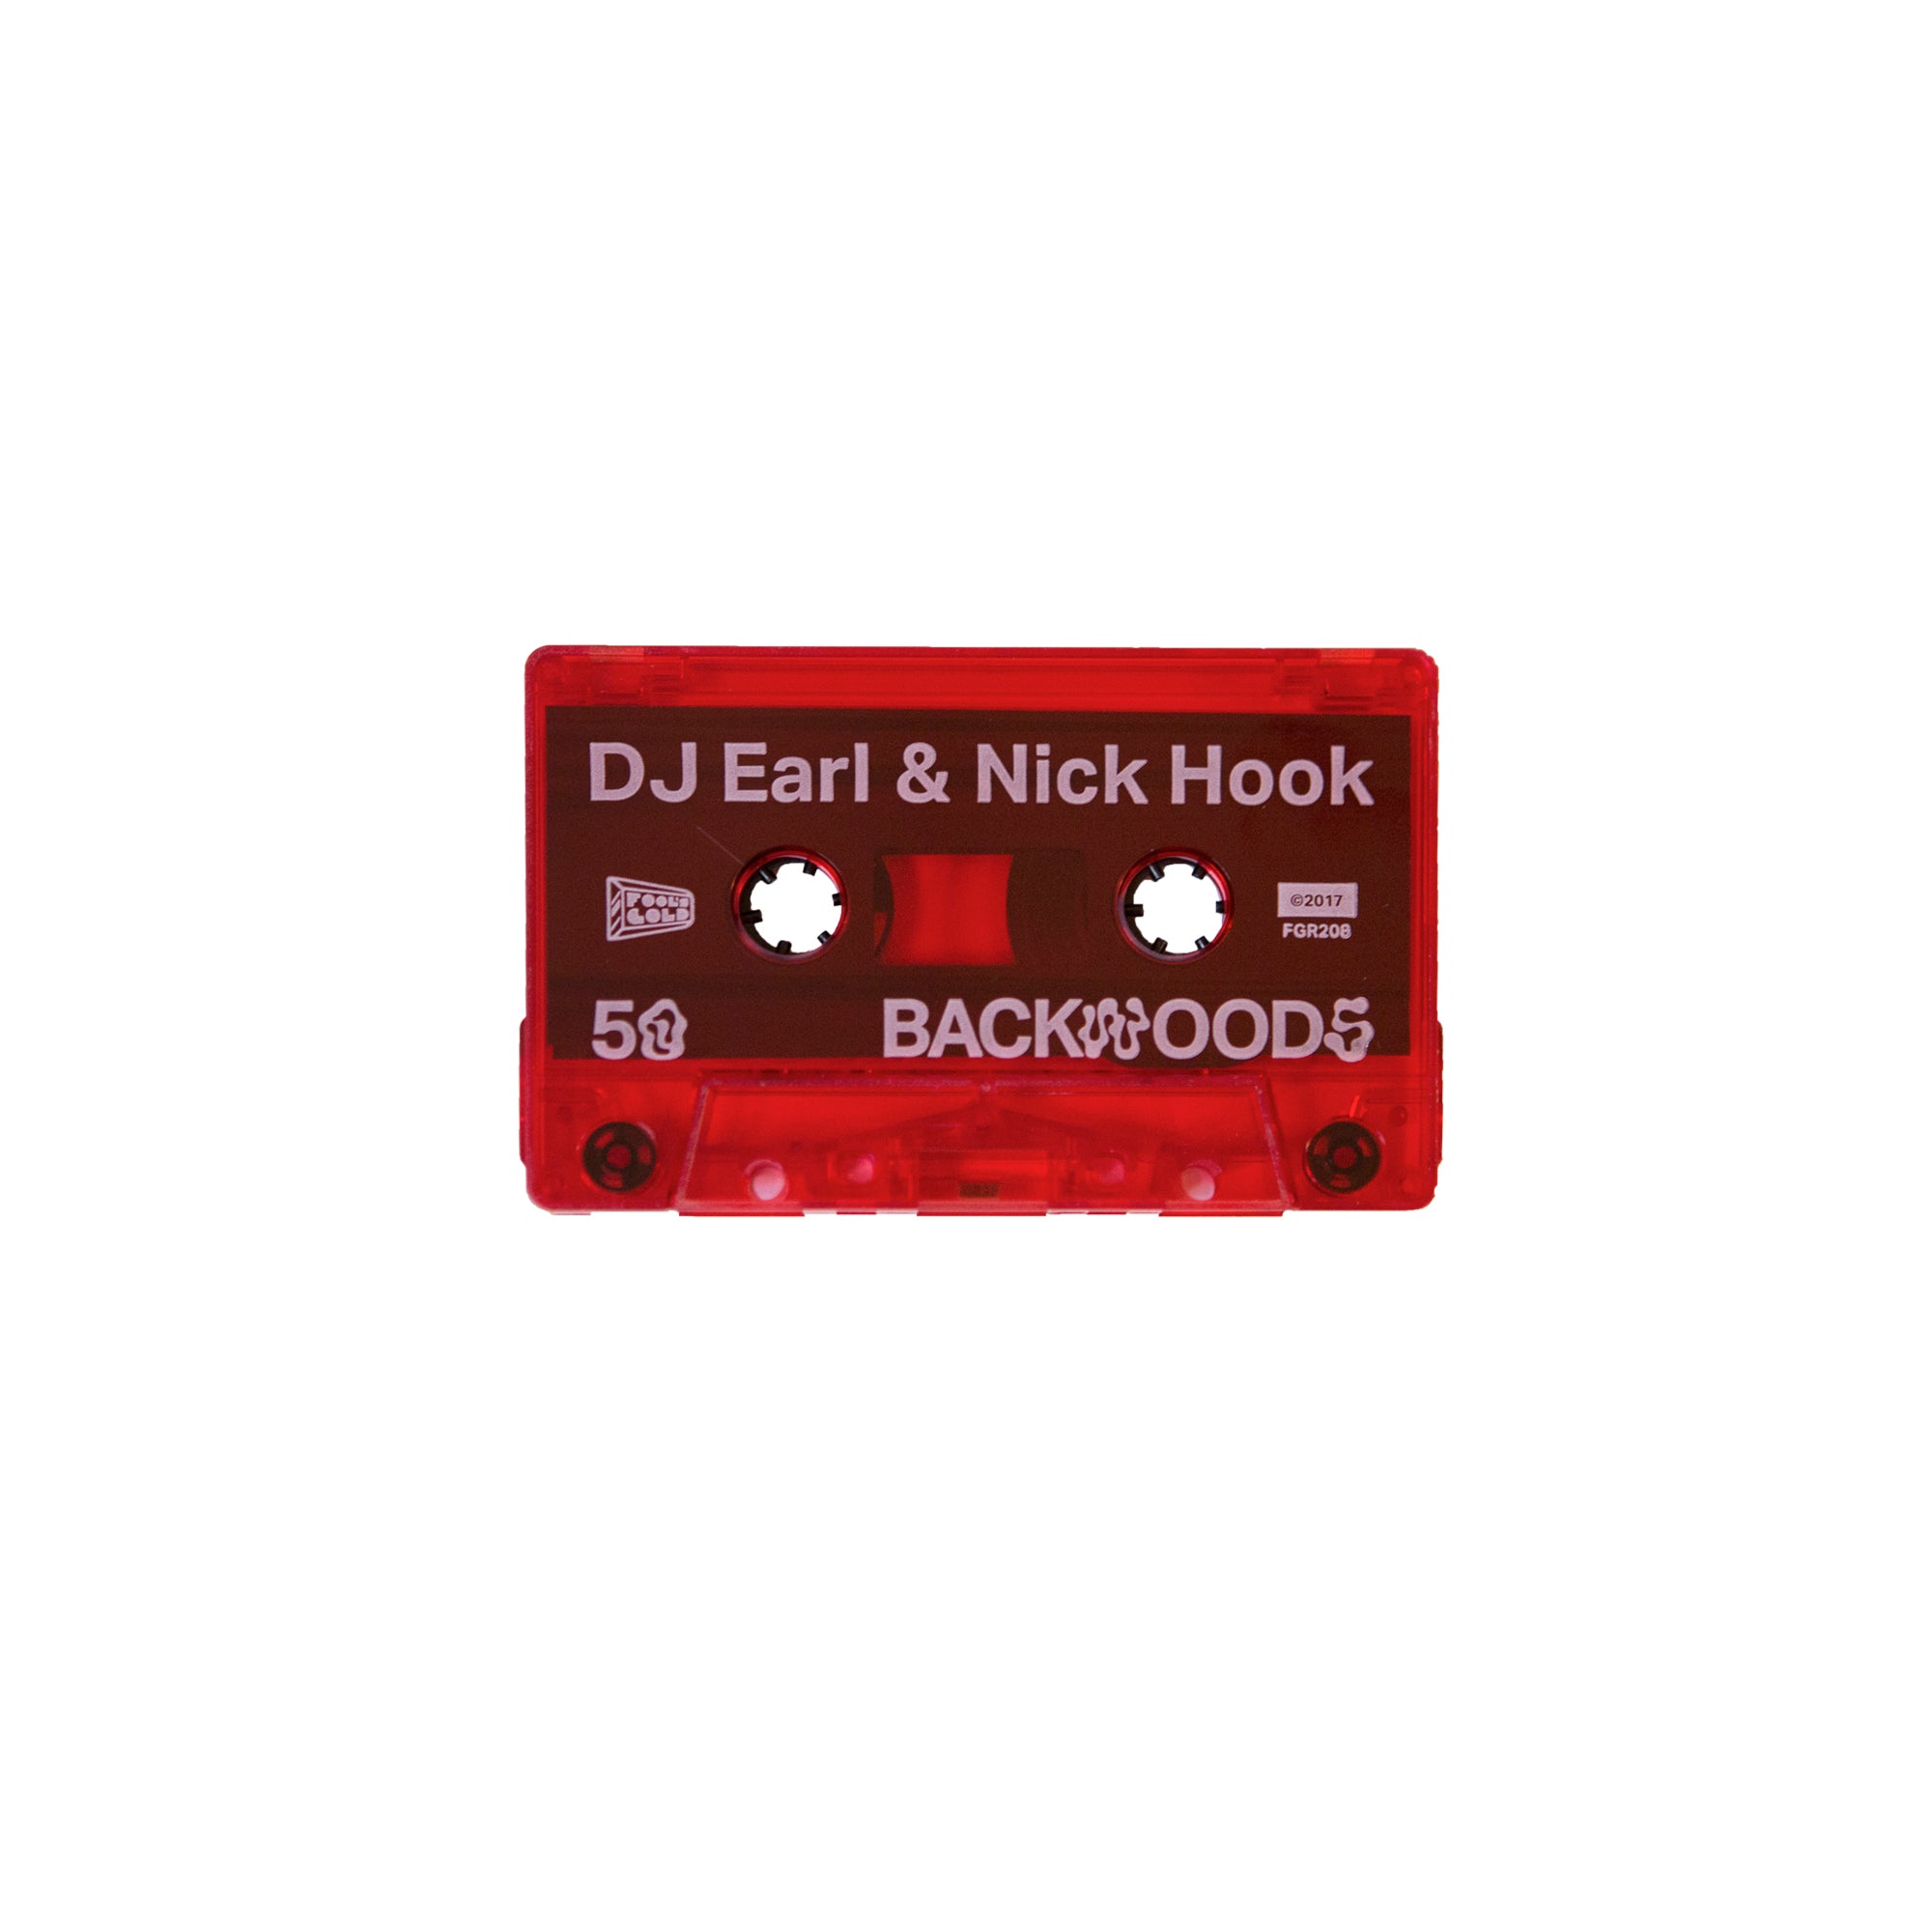 Nick Hook & Dj Earl 